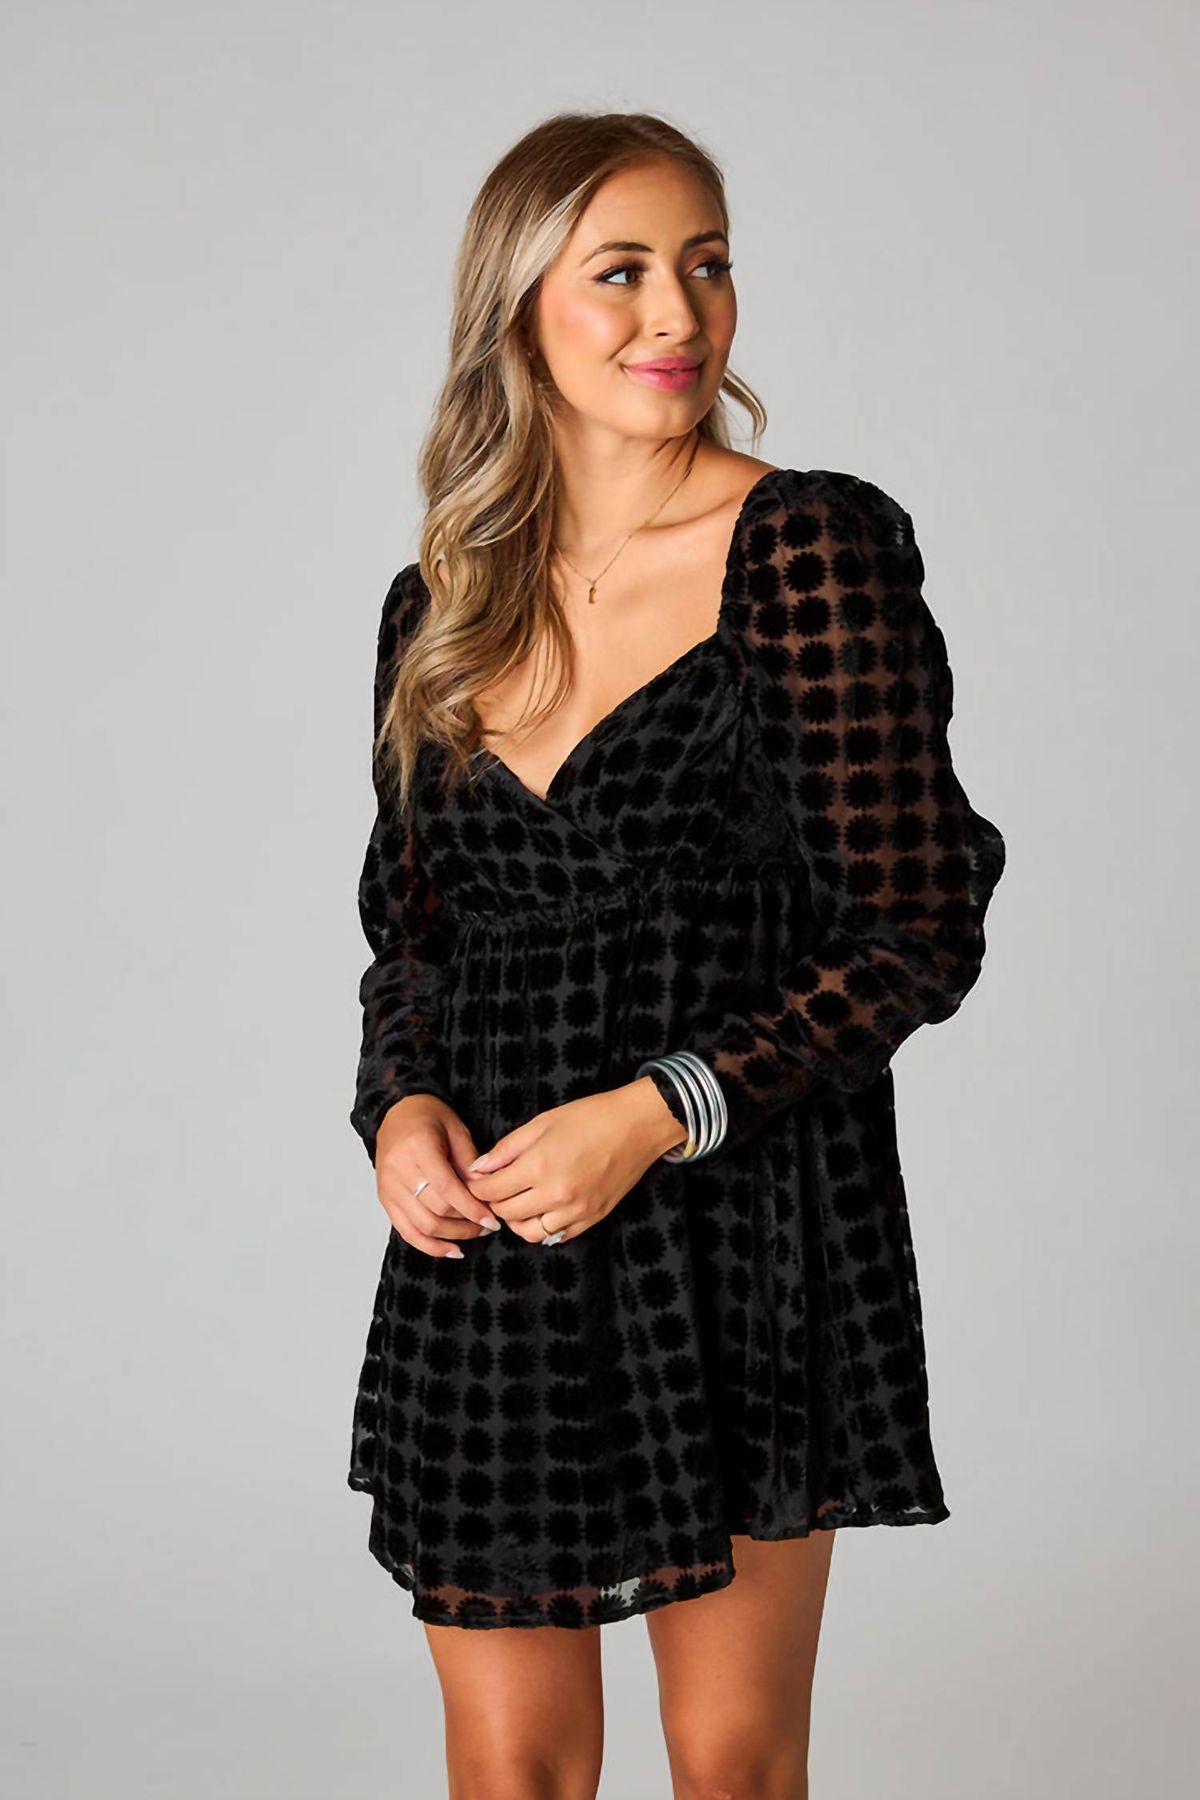 Style 1-2544909185-3011 BUDDYLOVE Size M Velvet Black Cocktail Dress on Queenly